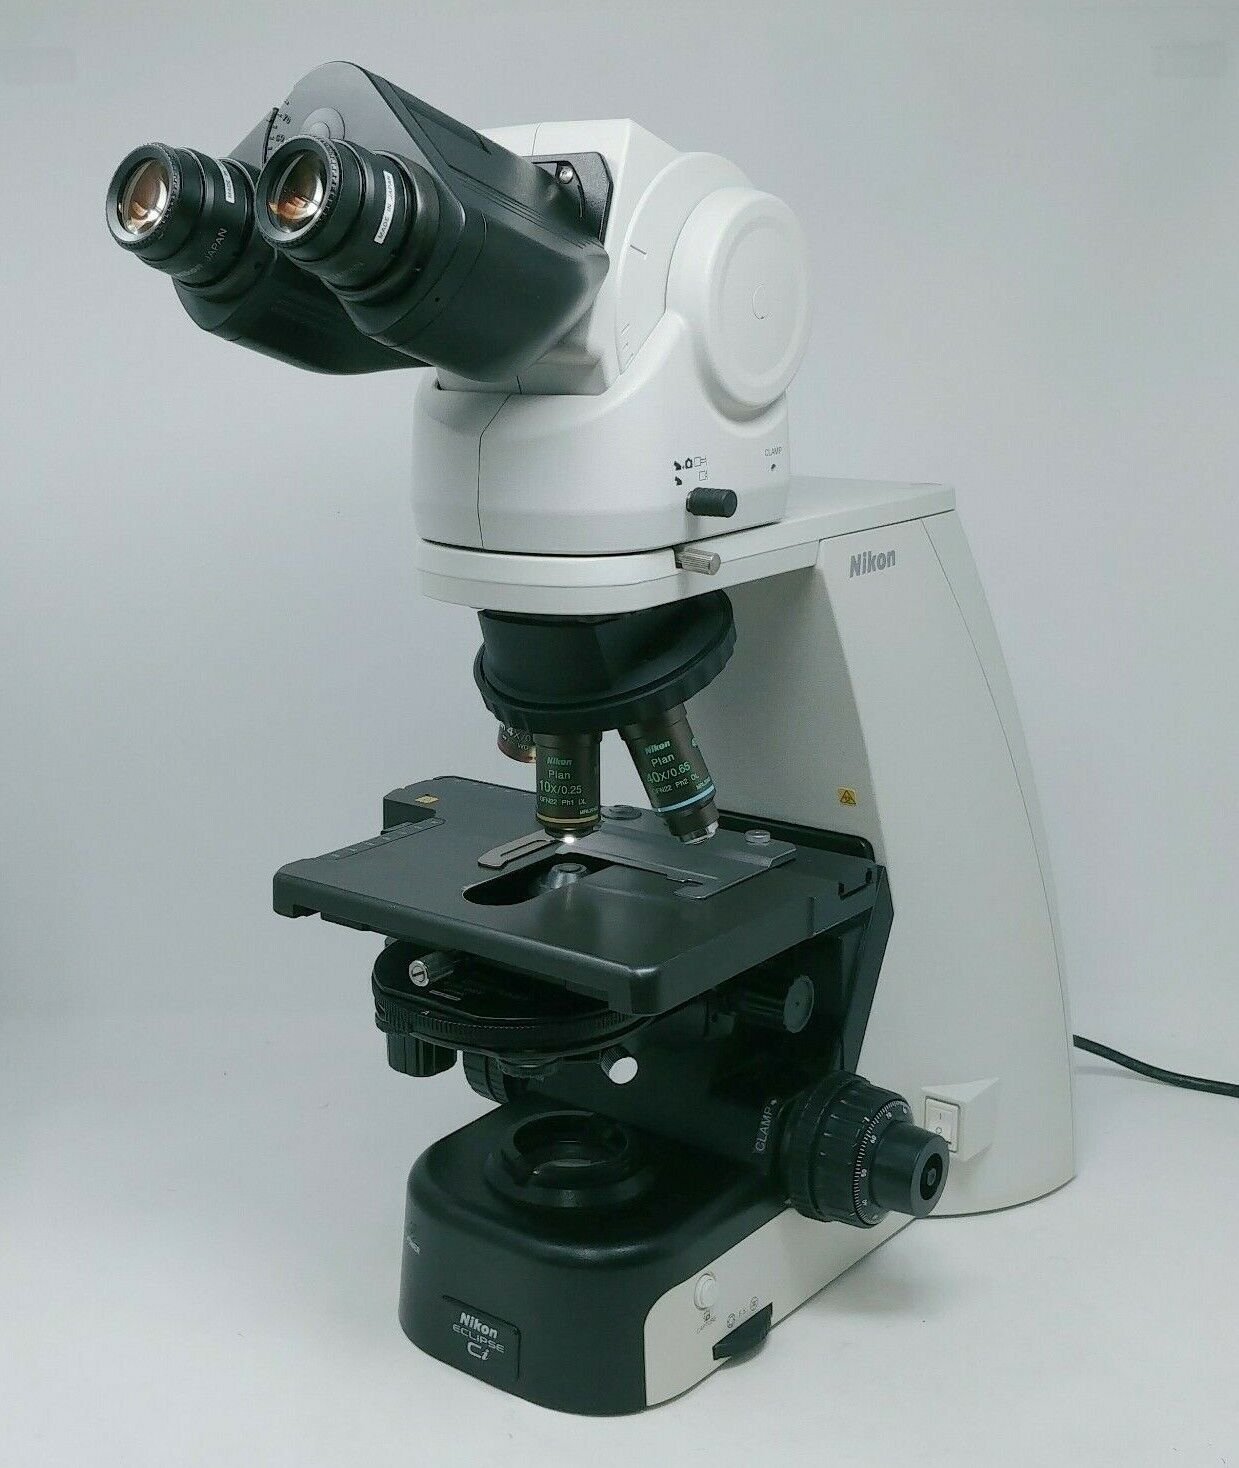 Nikon Ci -L microscope